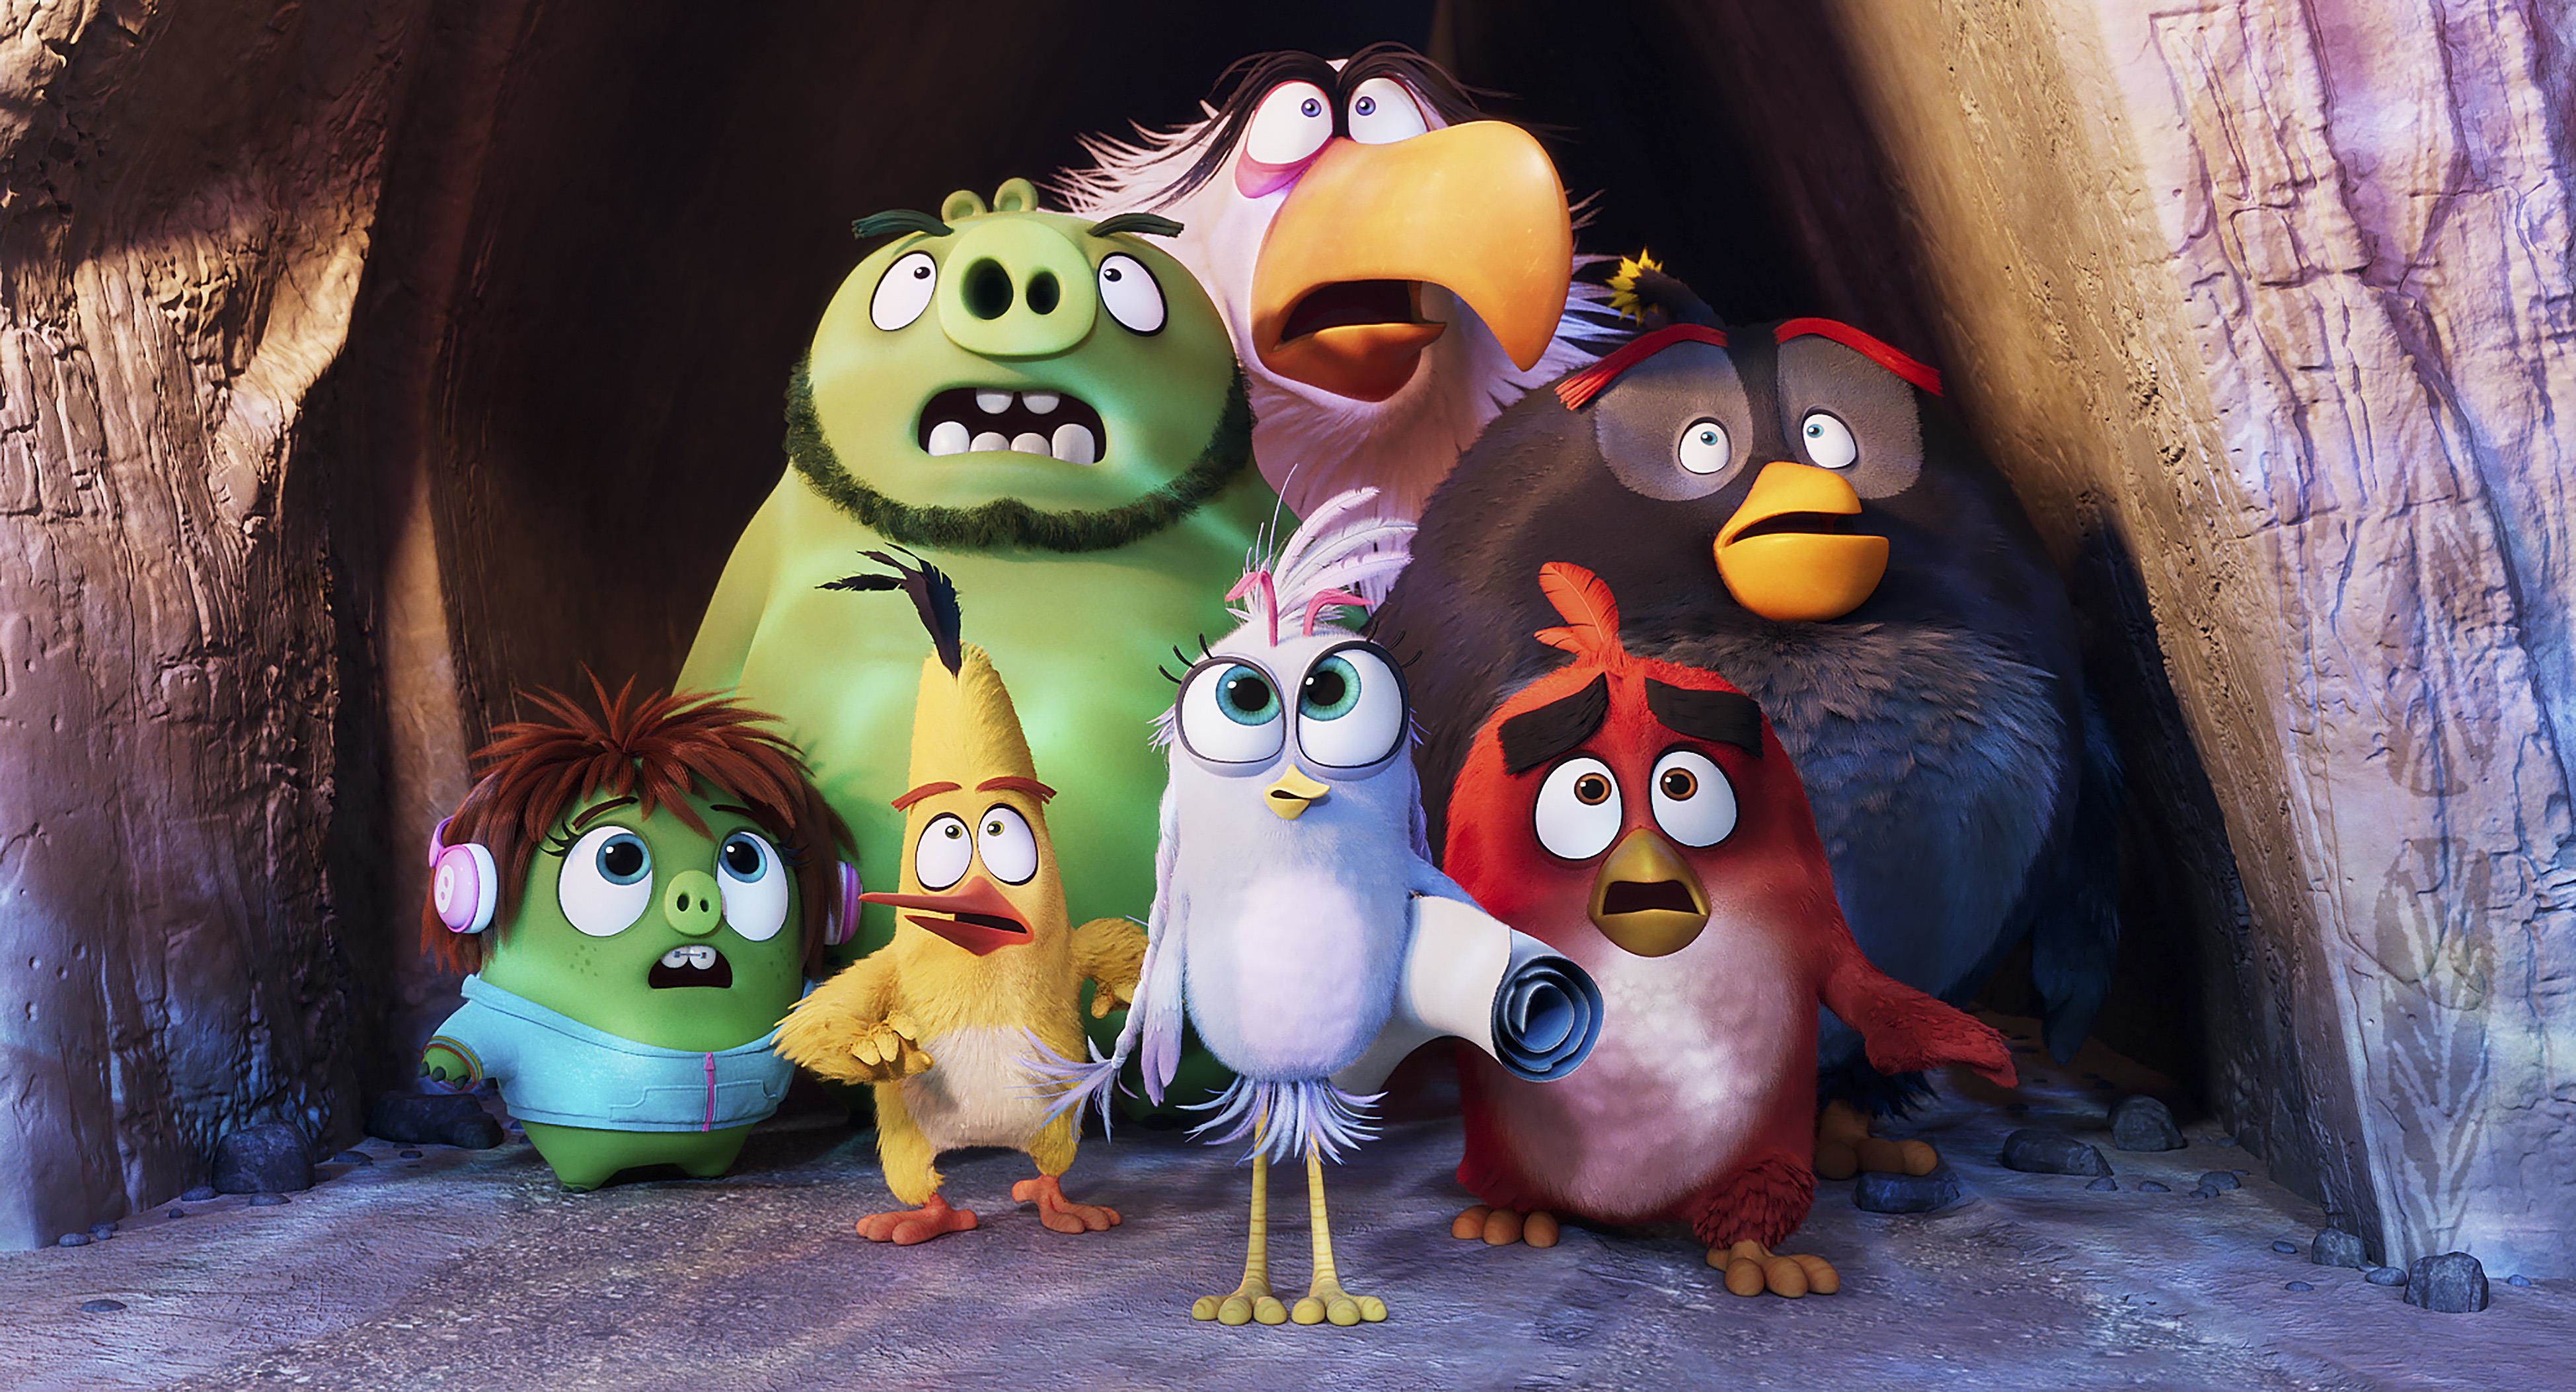 Image du film Angry Birds : copains comme cochons cbd8b1bc-cd56-4115-8fcc-3bb02b75617a